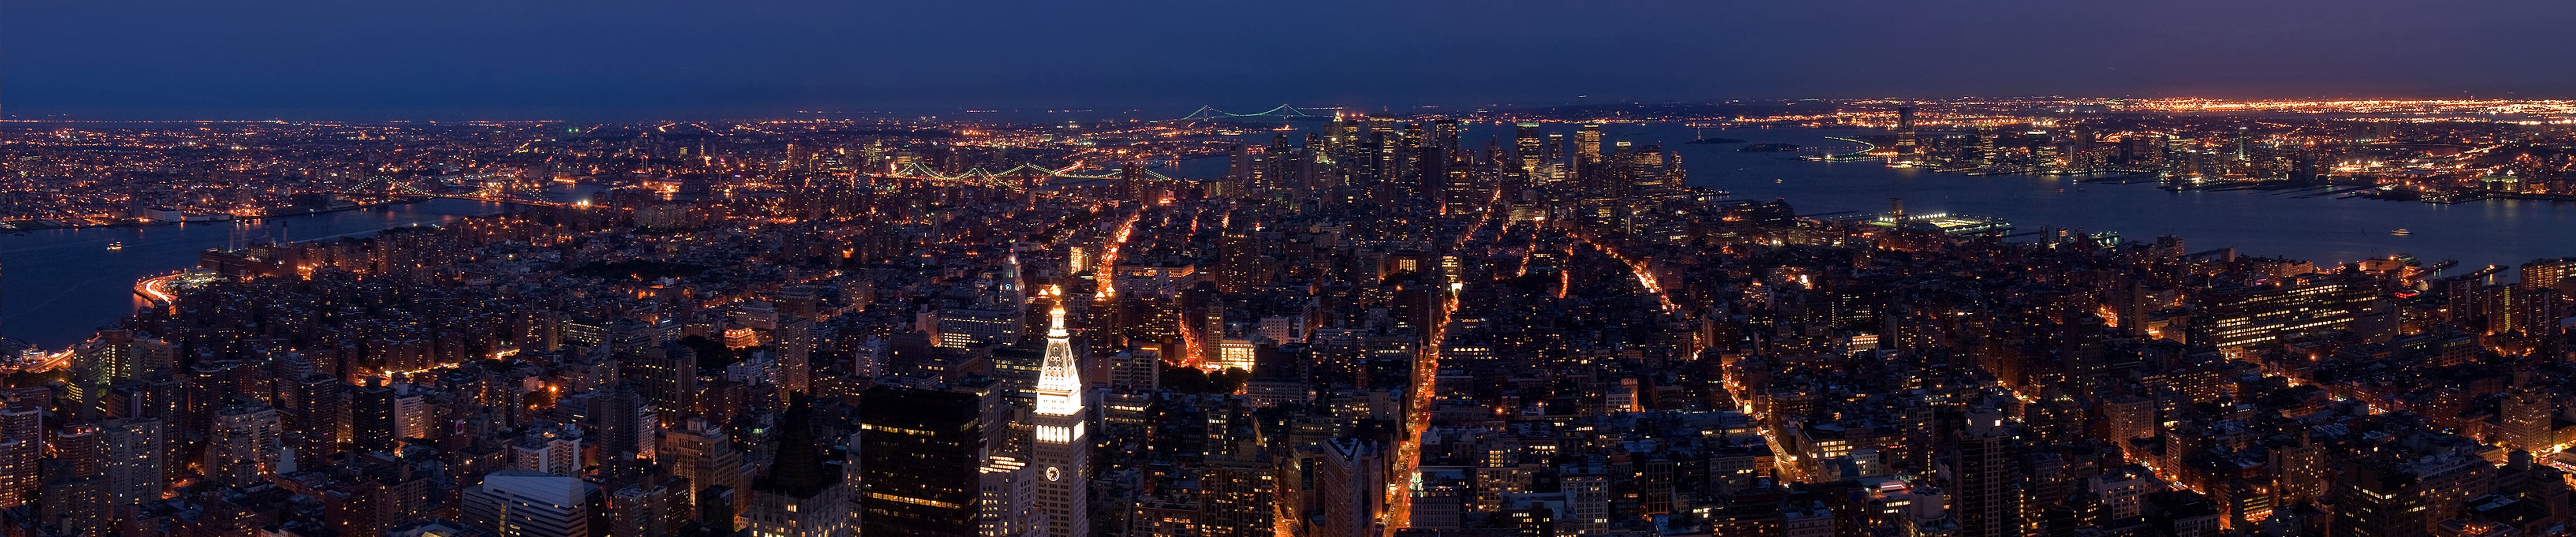 New York City, triple screen, wide angle, cityscape, city lights